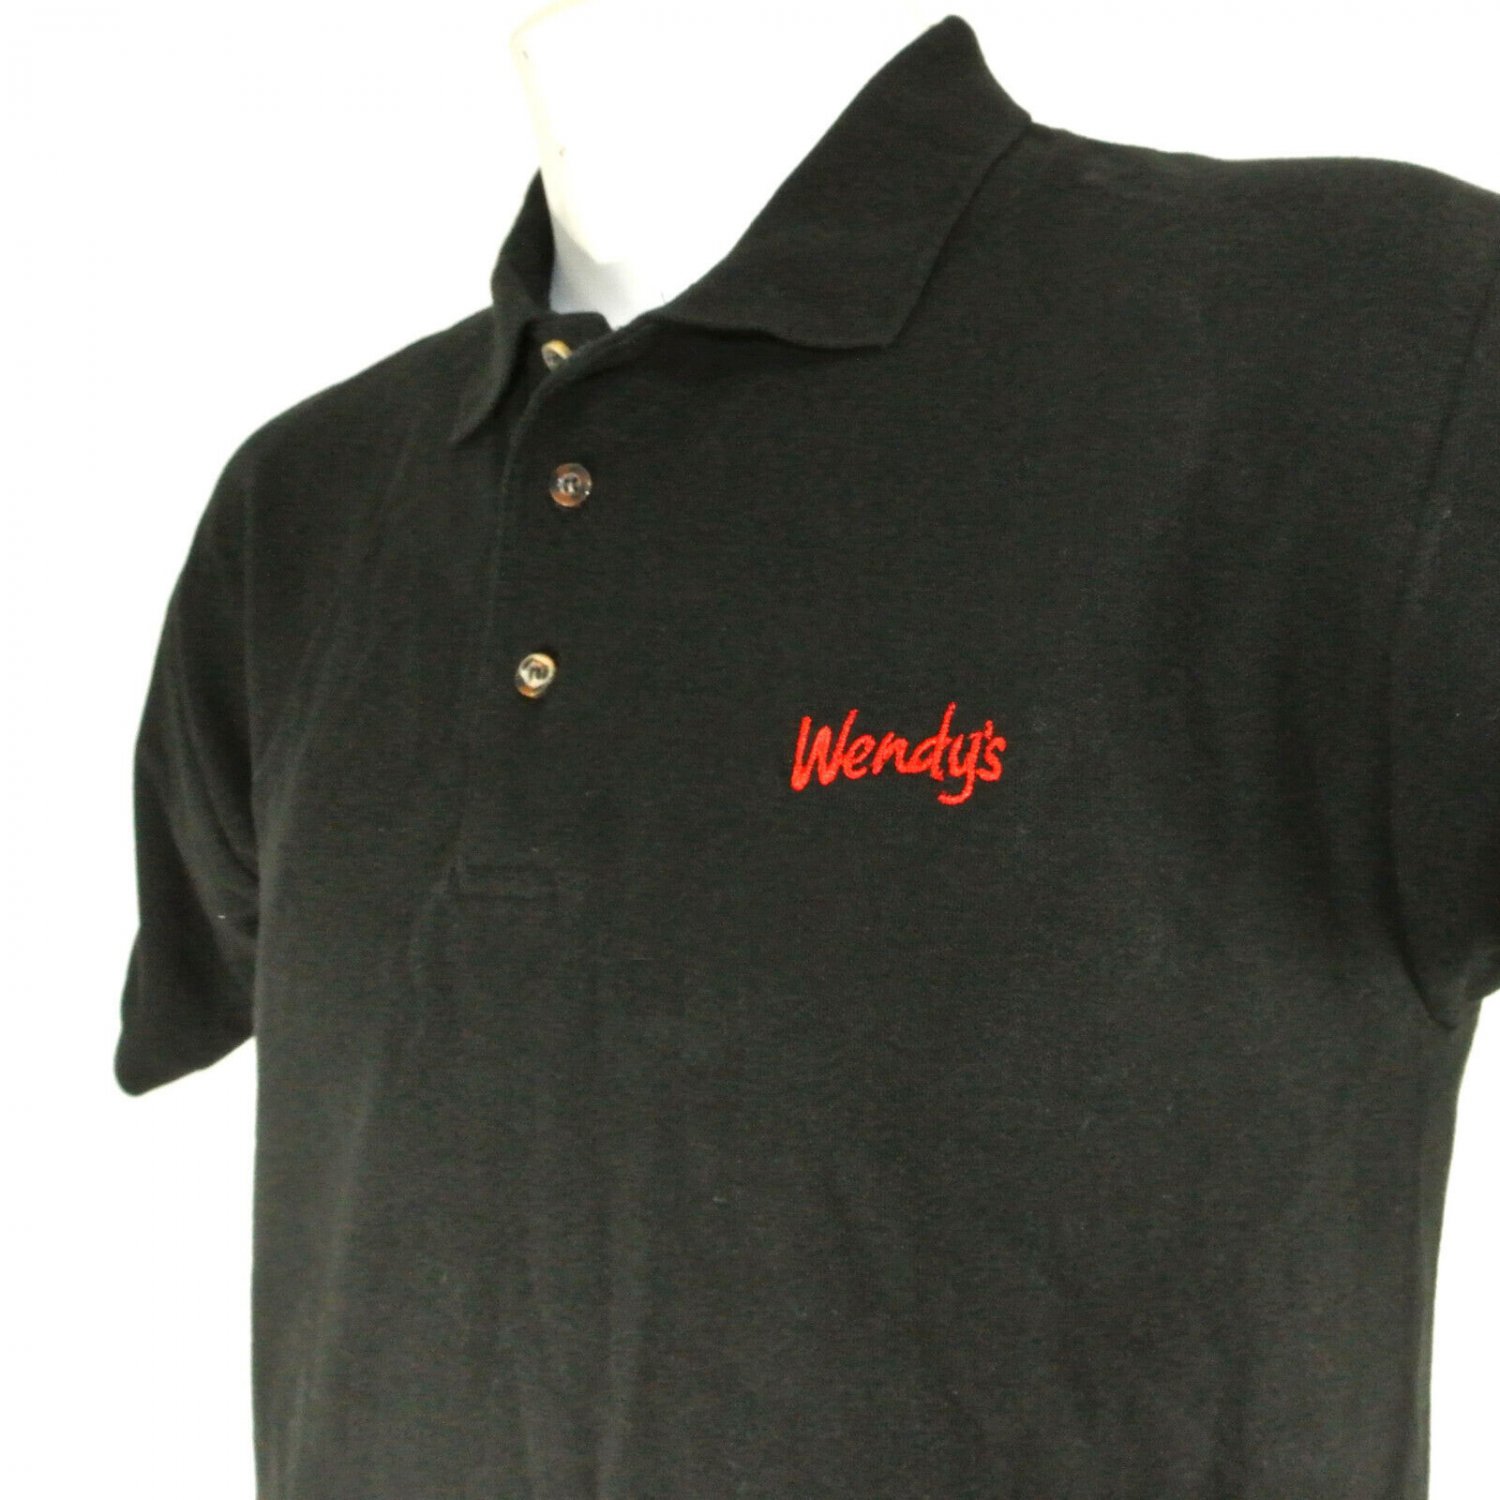 WALMART Associate Employee Uniform Polo Shirt Black Size M Medium